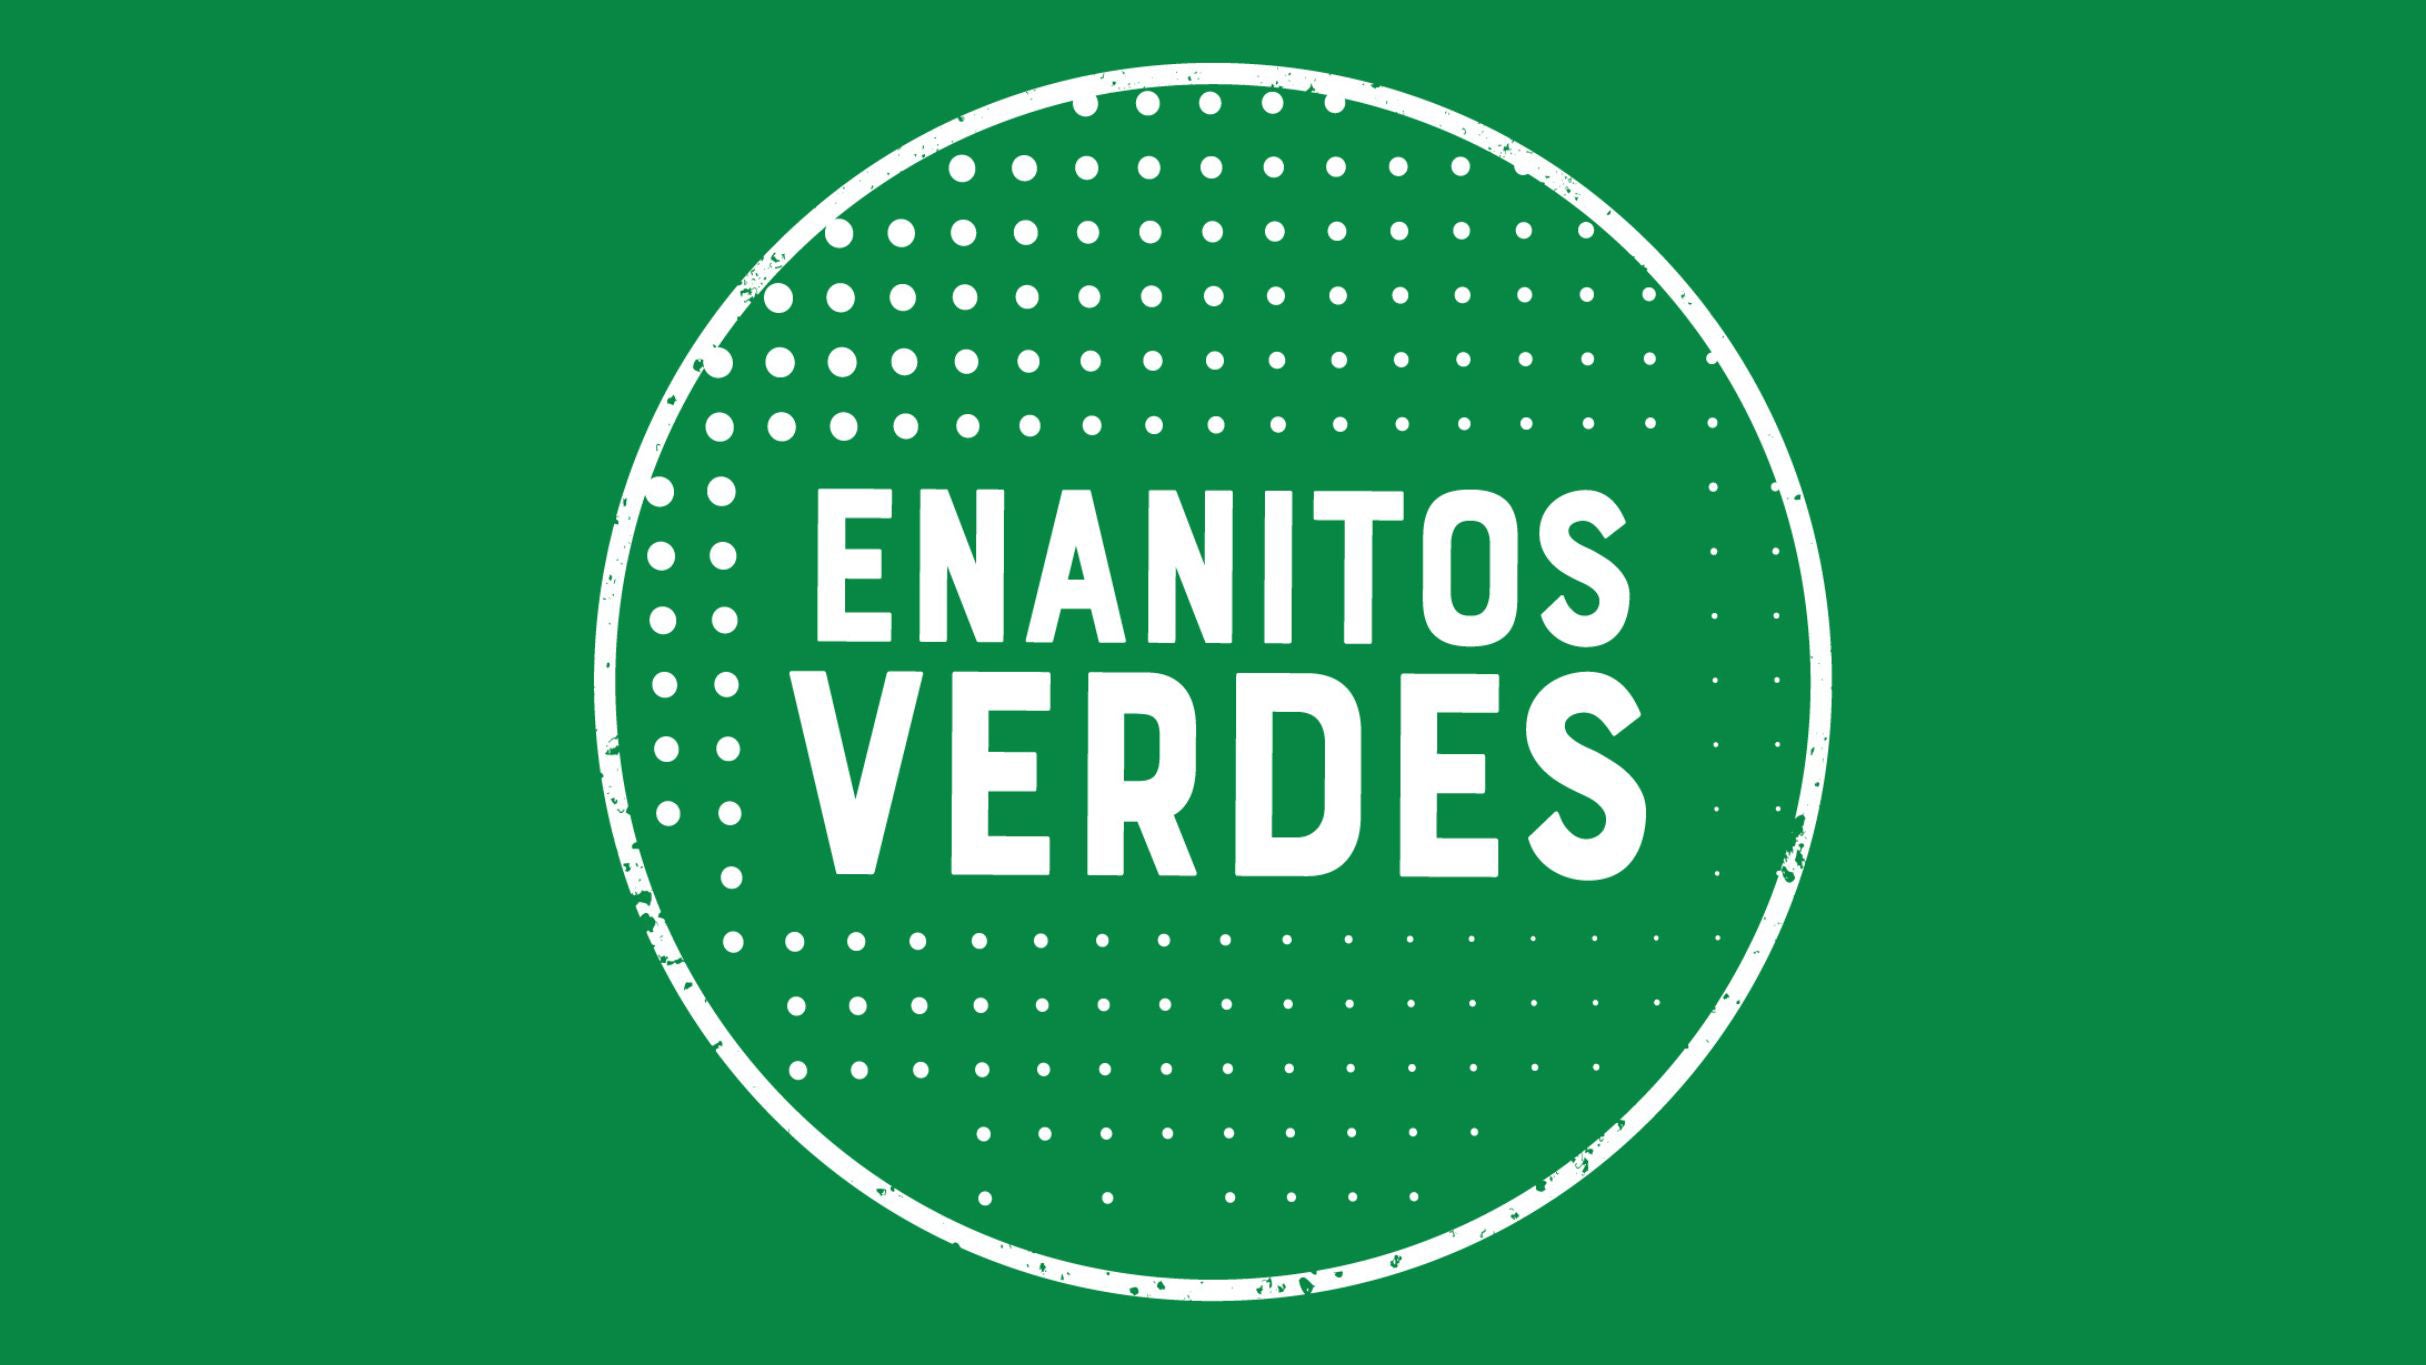 Enanitos Verdes in Anaheim promo photo for Ticketmaster presale offer code